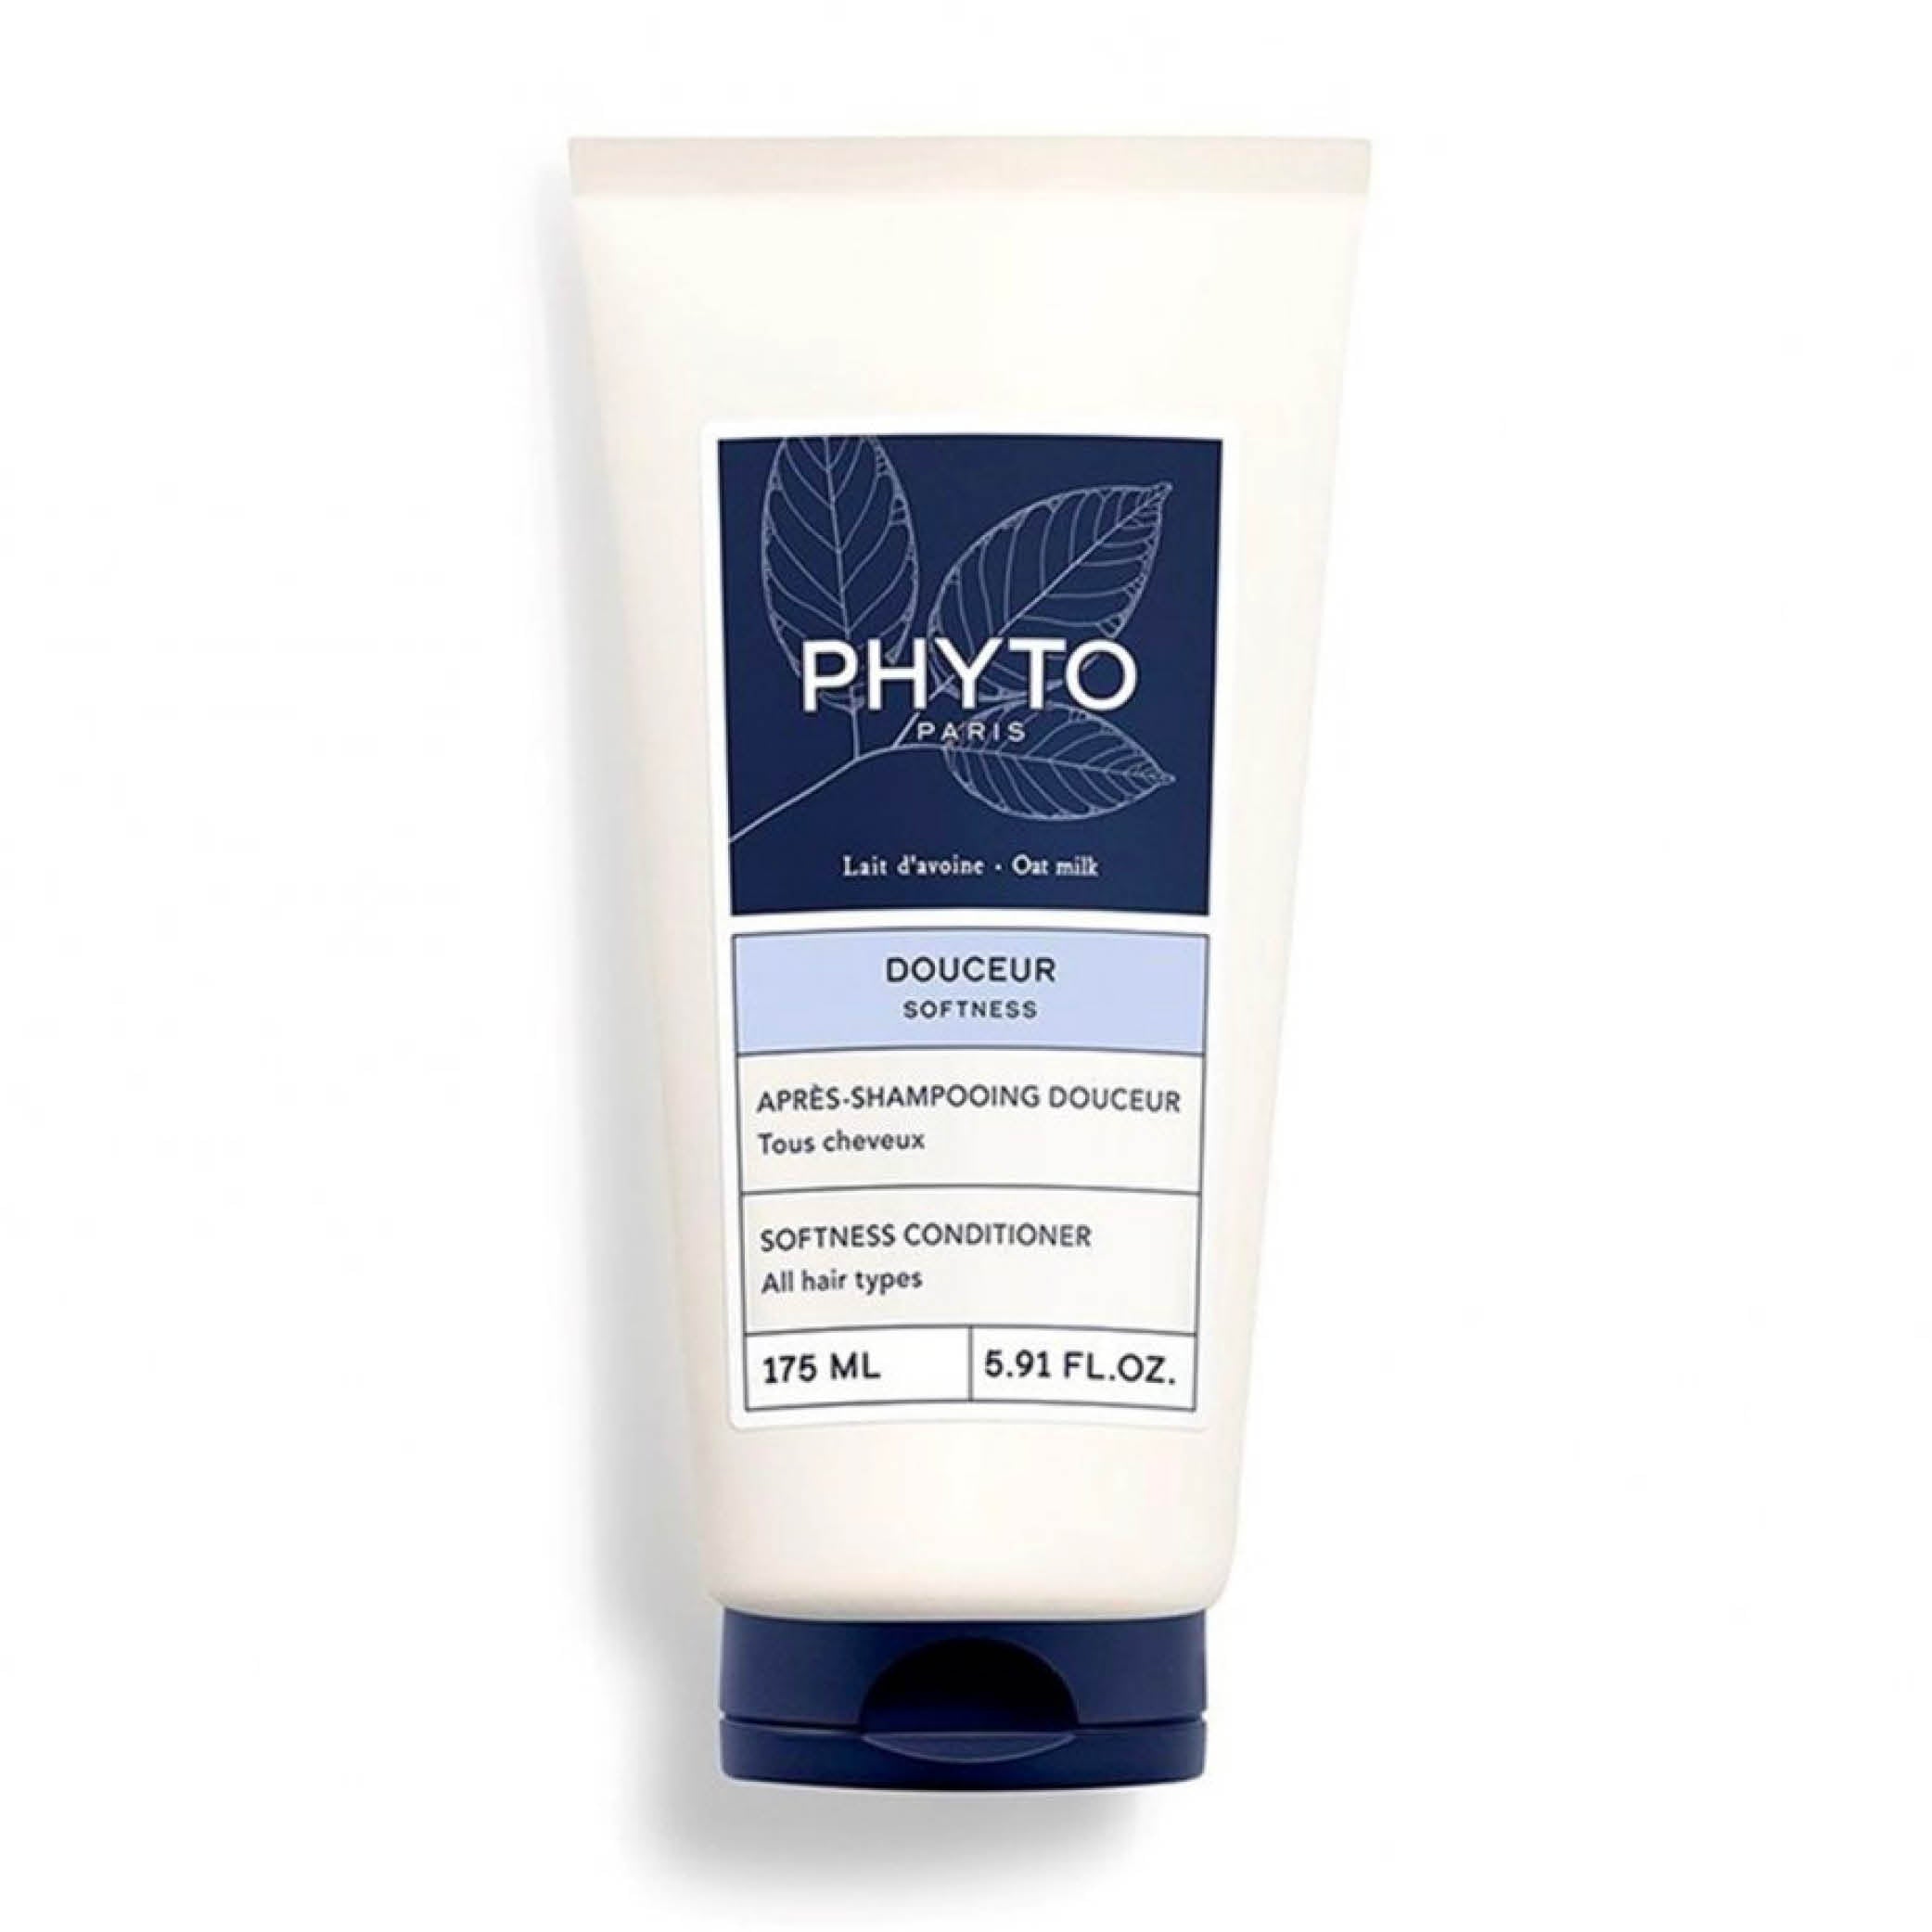 PHYTOSOFTNESS Softness After-Shampoo